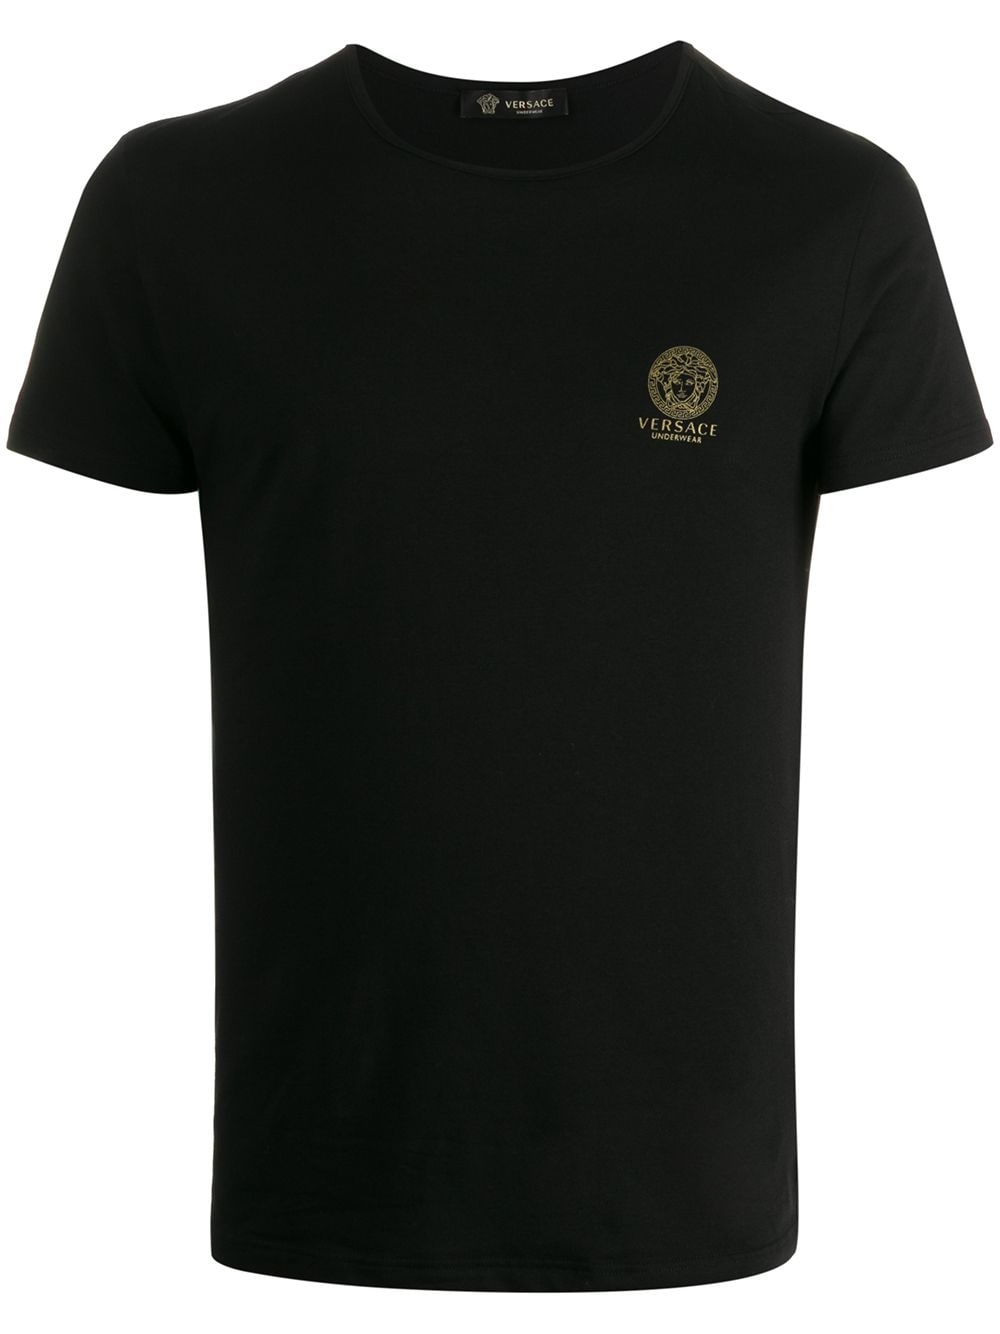 Versace Medusa chest logo T-shirt - Black